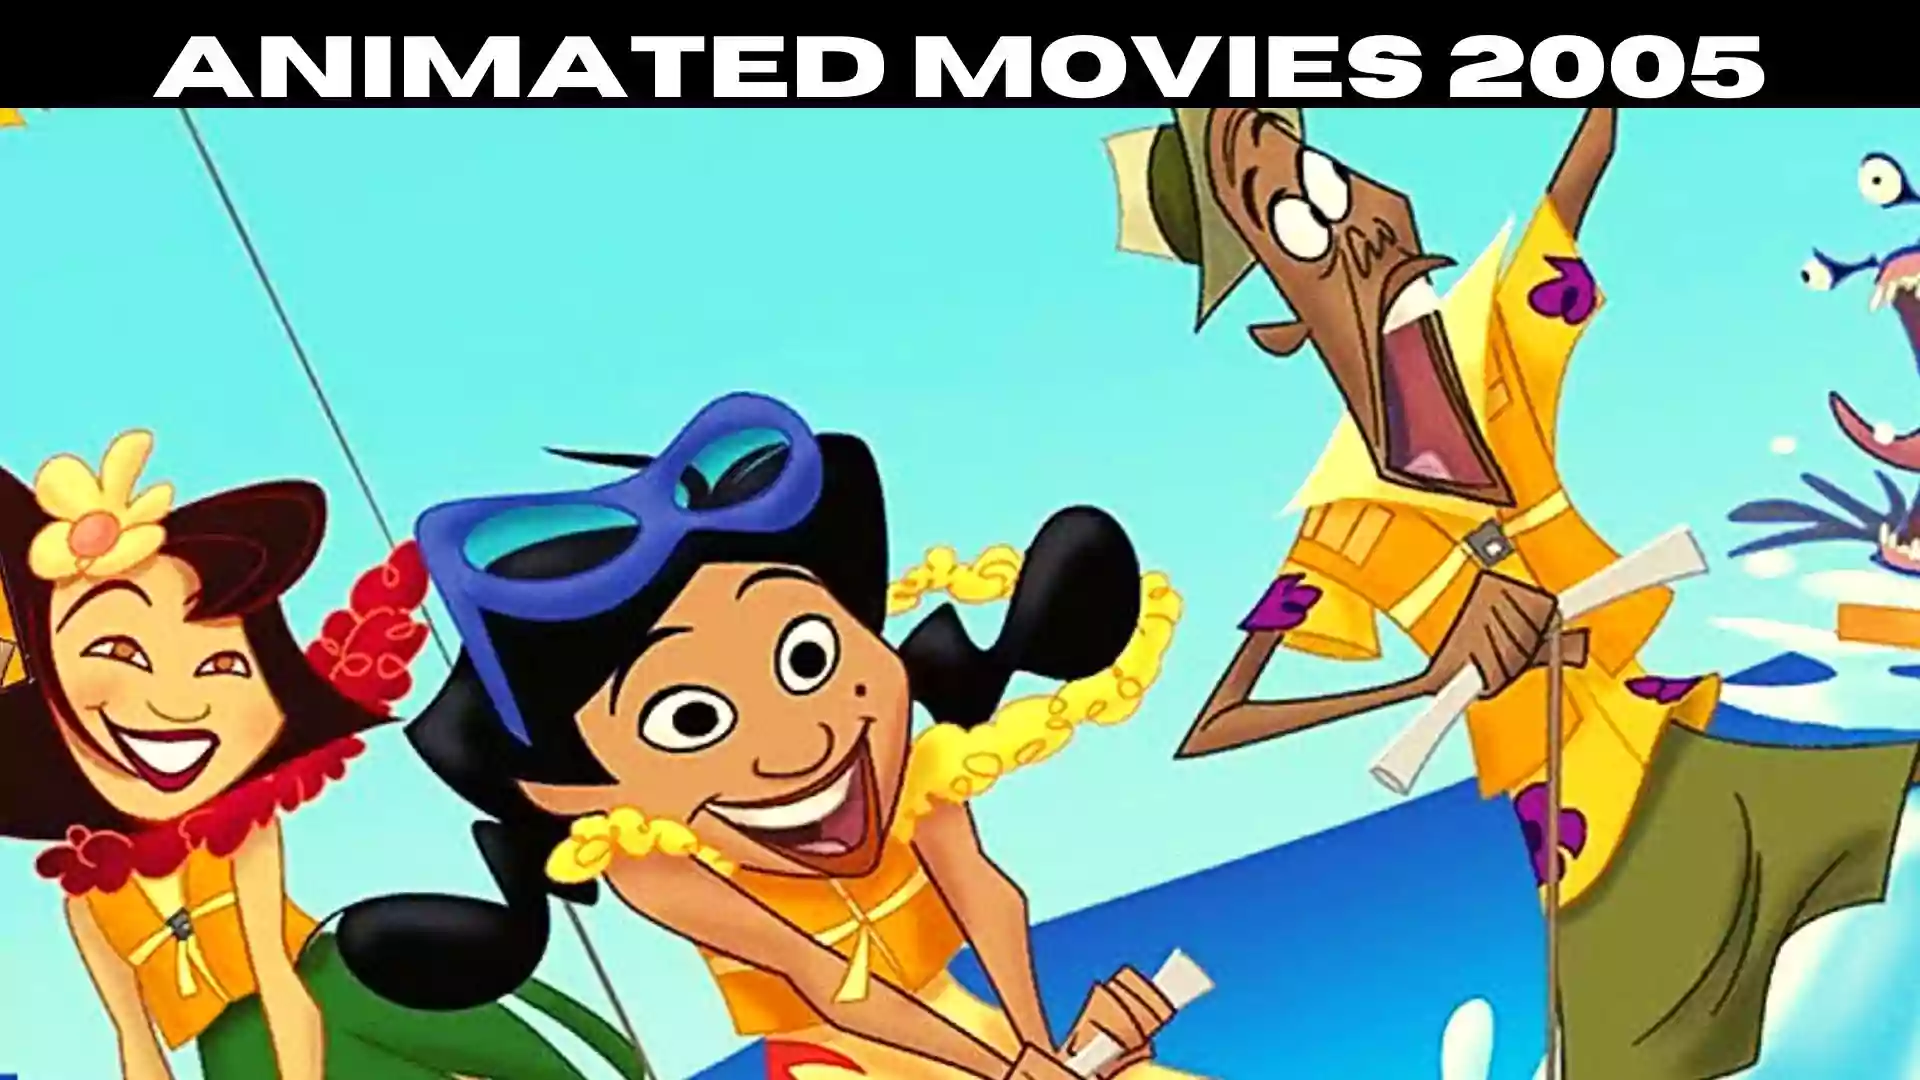 Animated Movies 2005